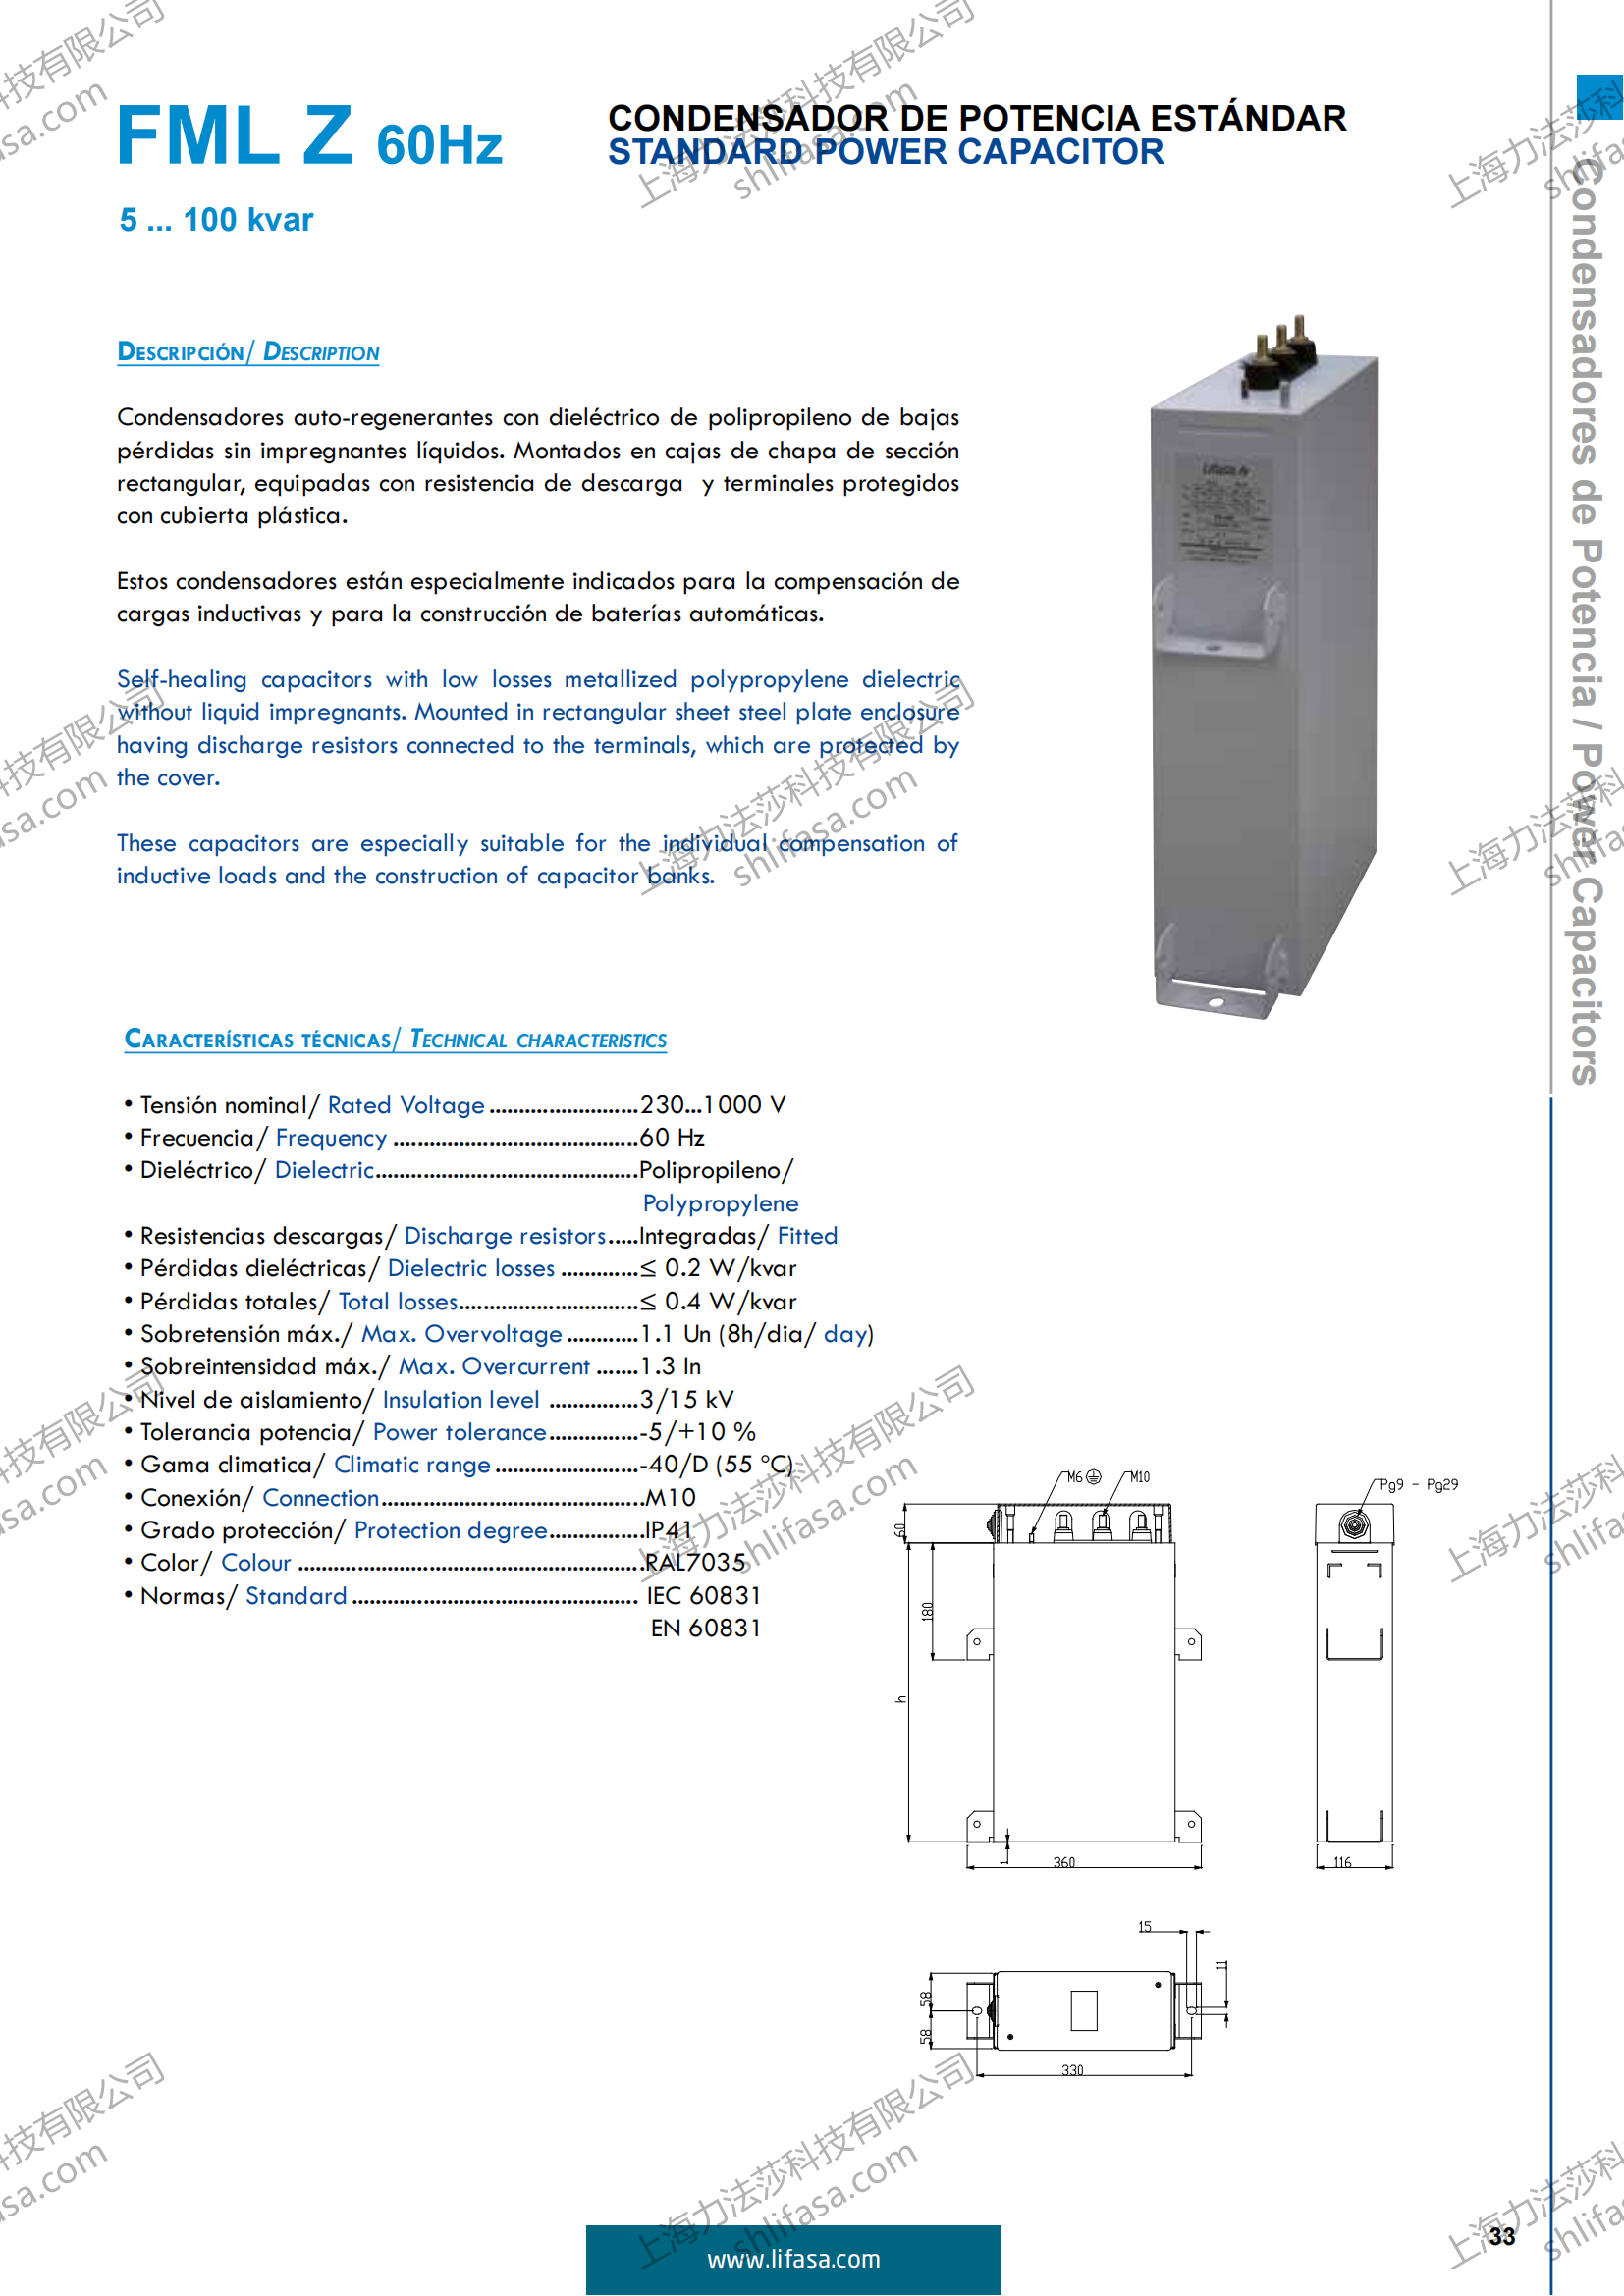 FML Z 60Hz 标准电力电容器-1.png